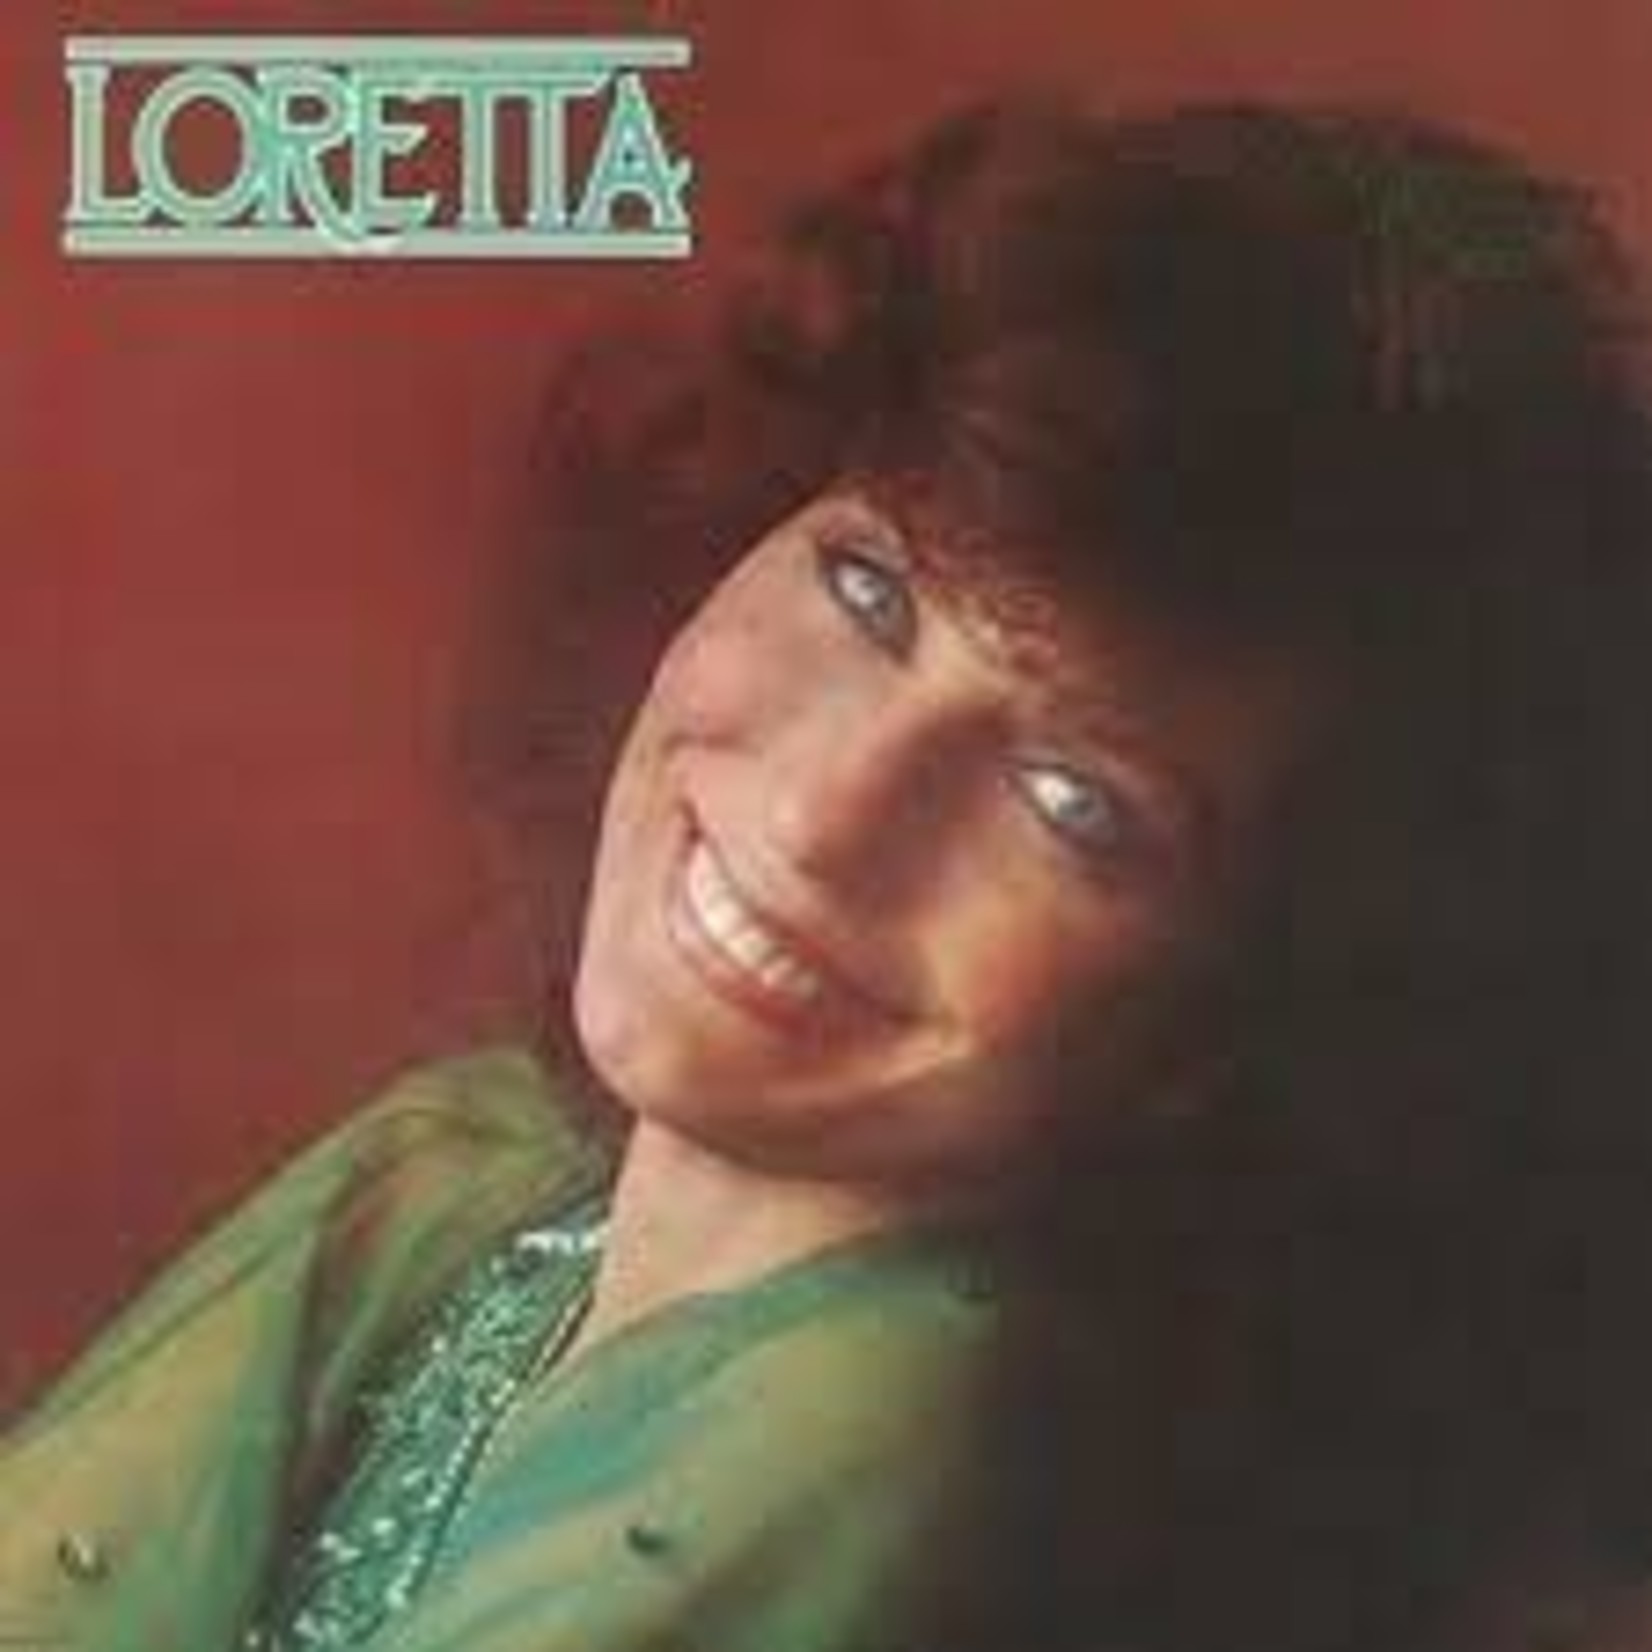 [Vintage] Loretta Lynn - Loretta